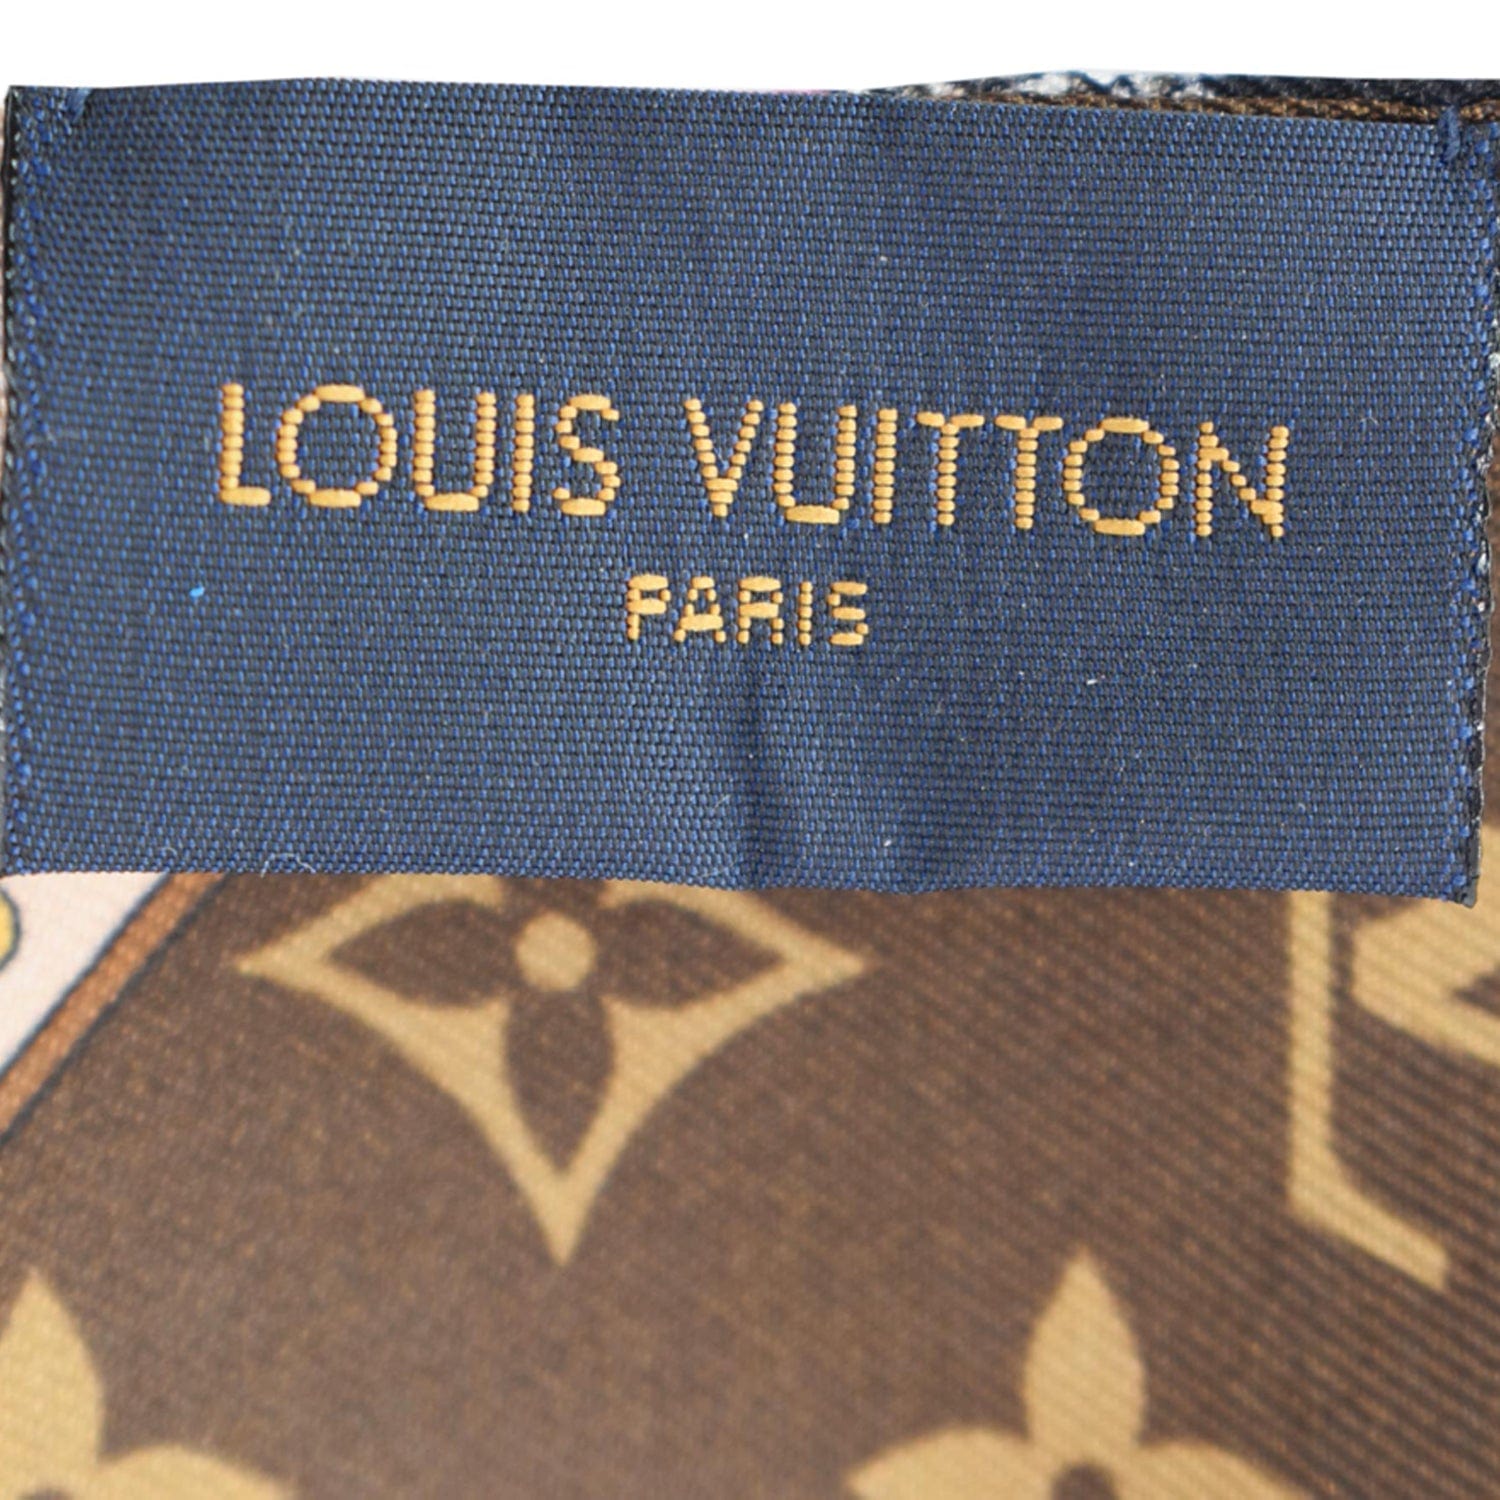 Louis Vuitton® Ultimate Monogram BB Bandeau White. Size in 2023